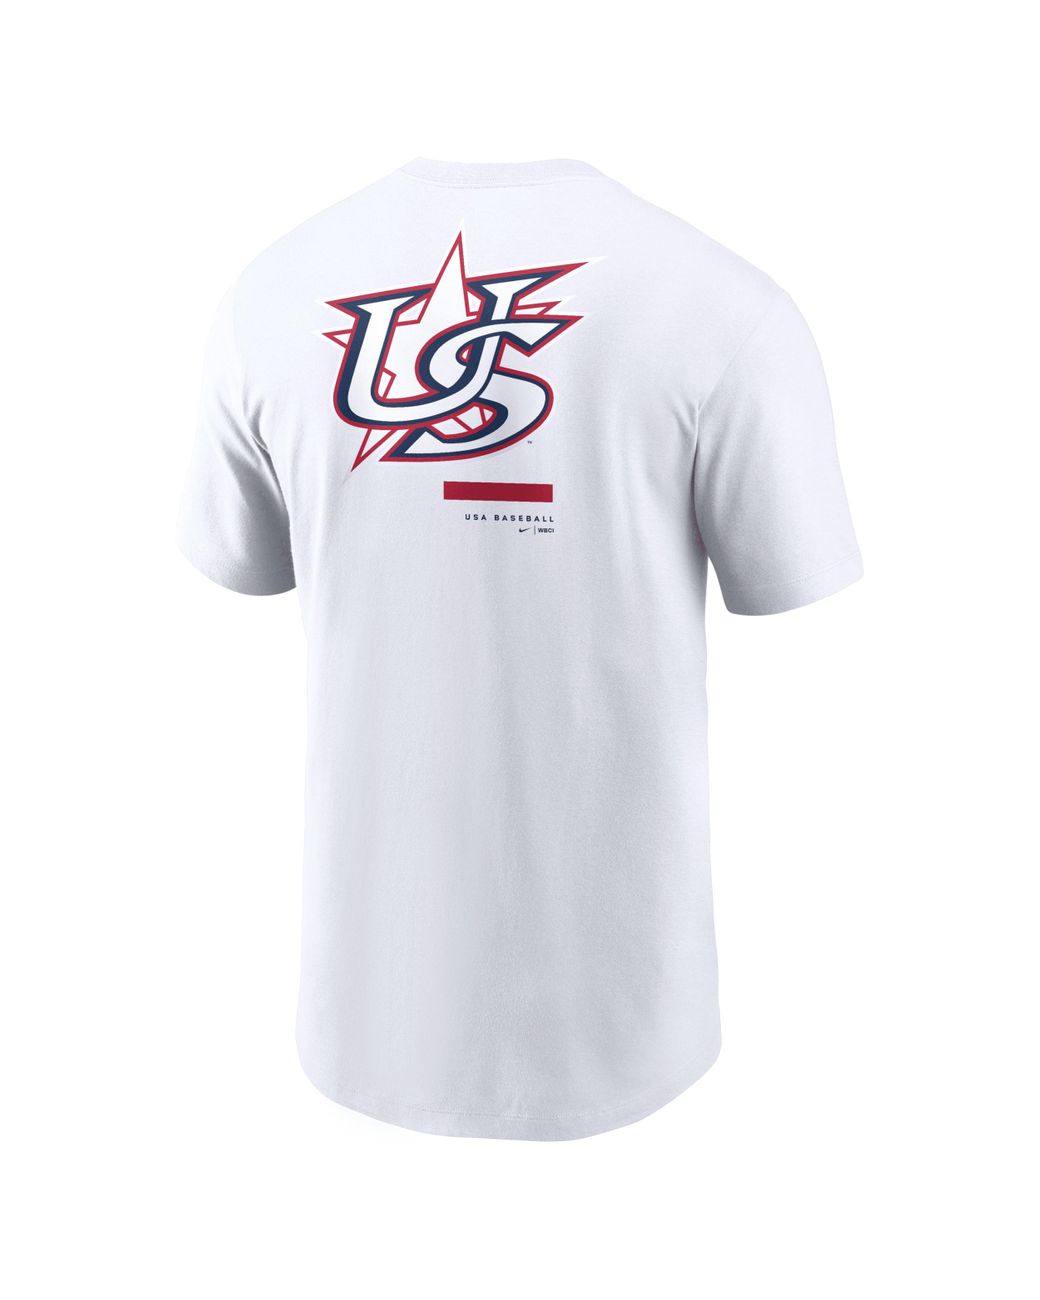 MLB World Tour St. Louis Cardinals baseball logo 2023 shirt